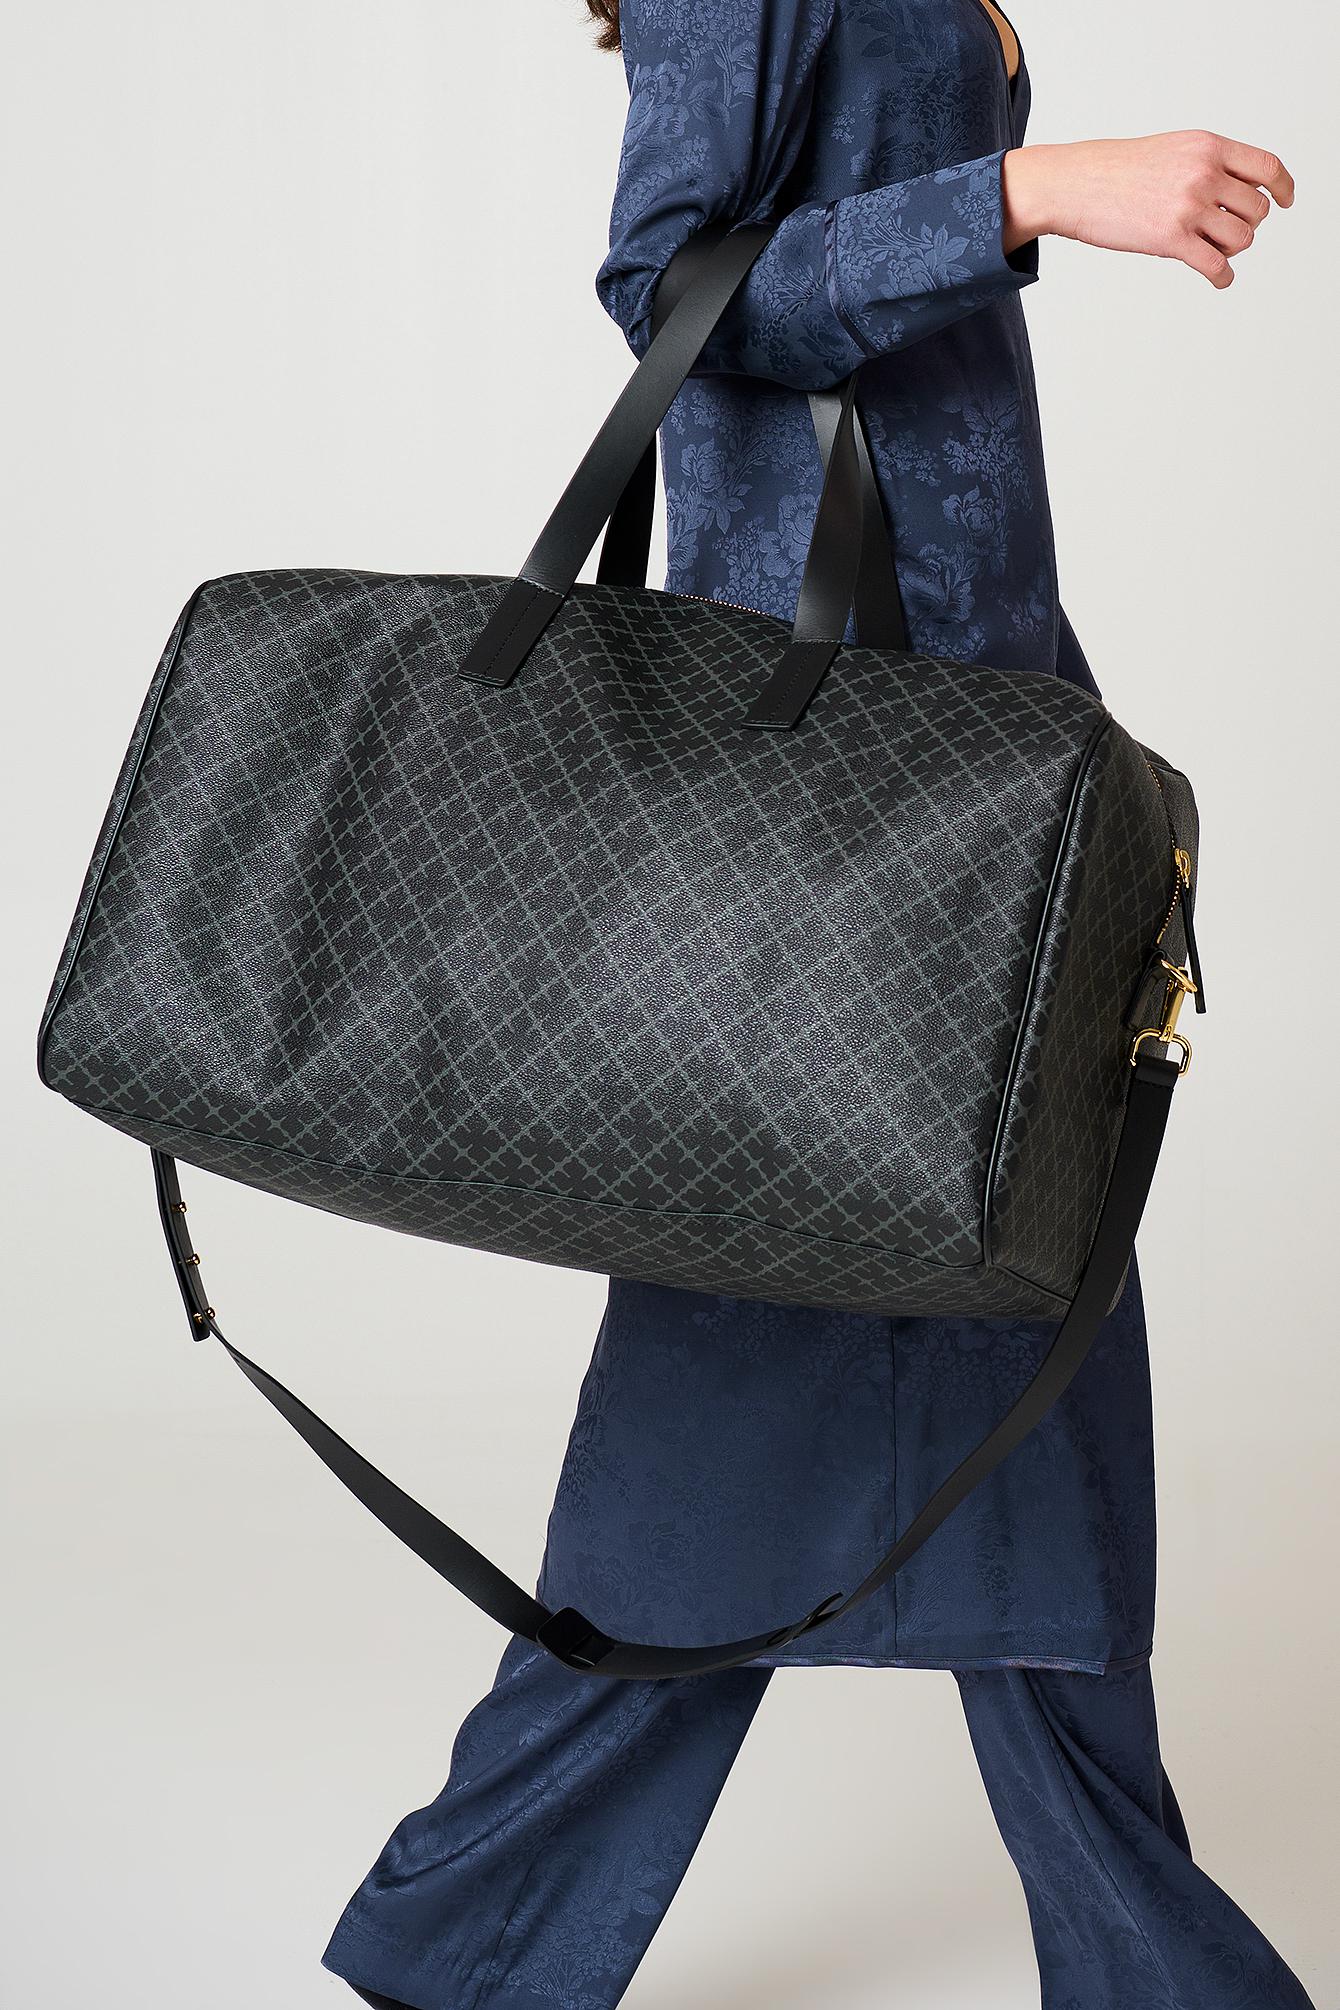 By Malene Birger Leather Wallikan Travel Bag in Black - Lyst